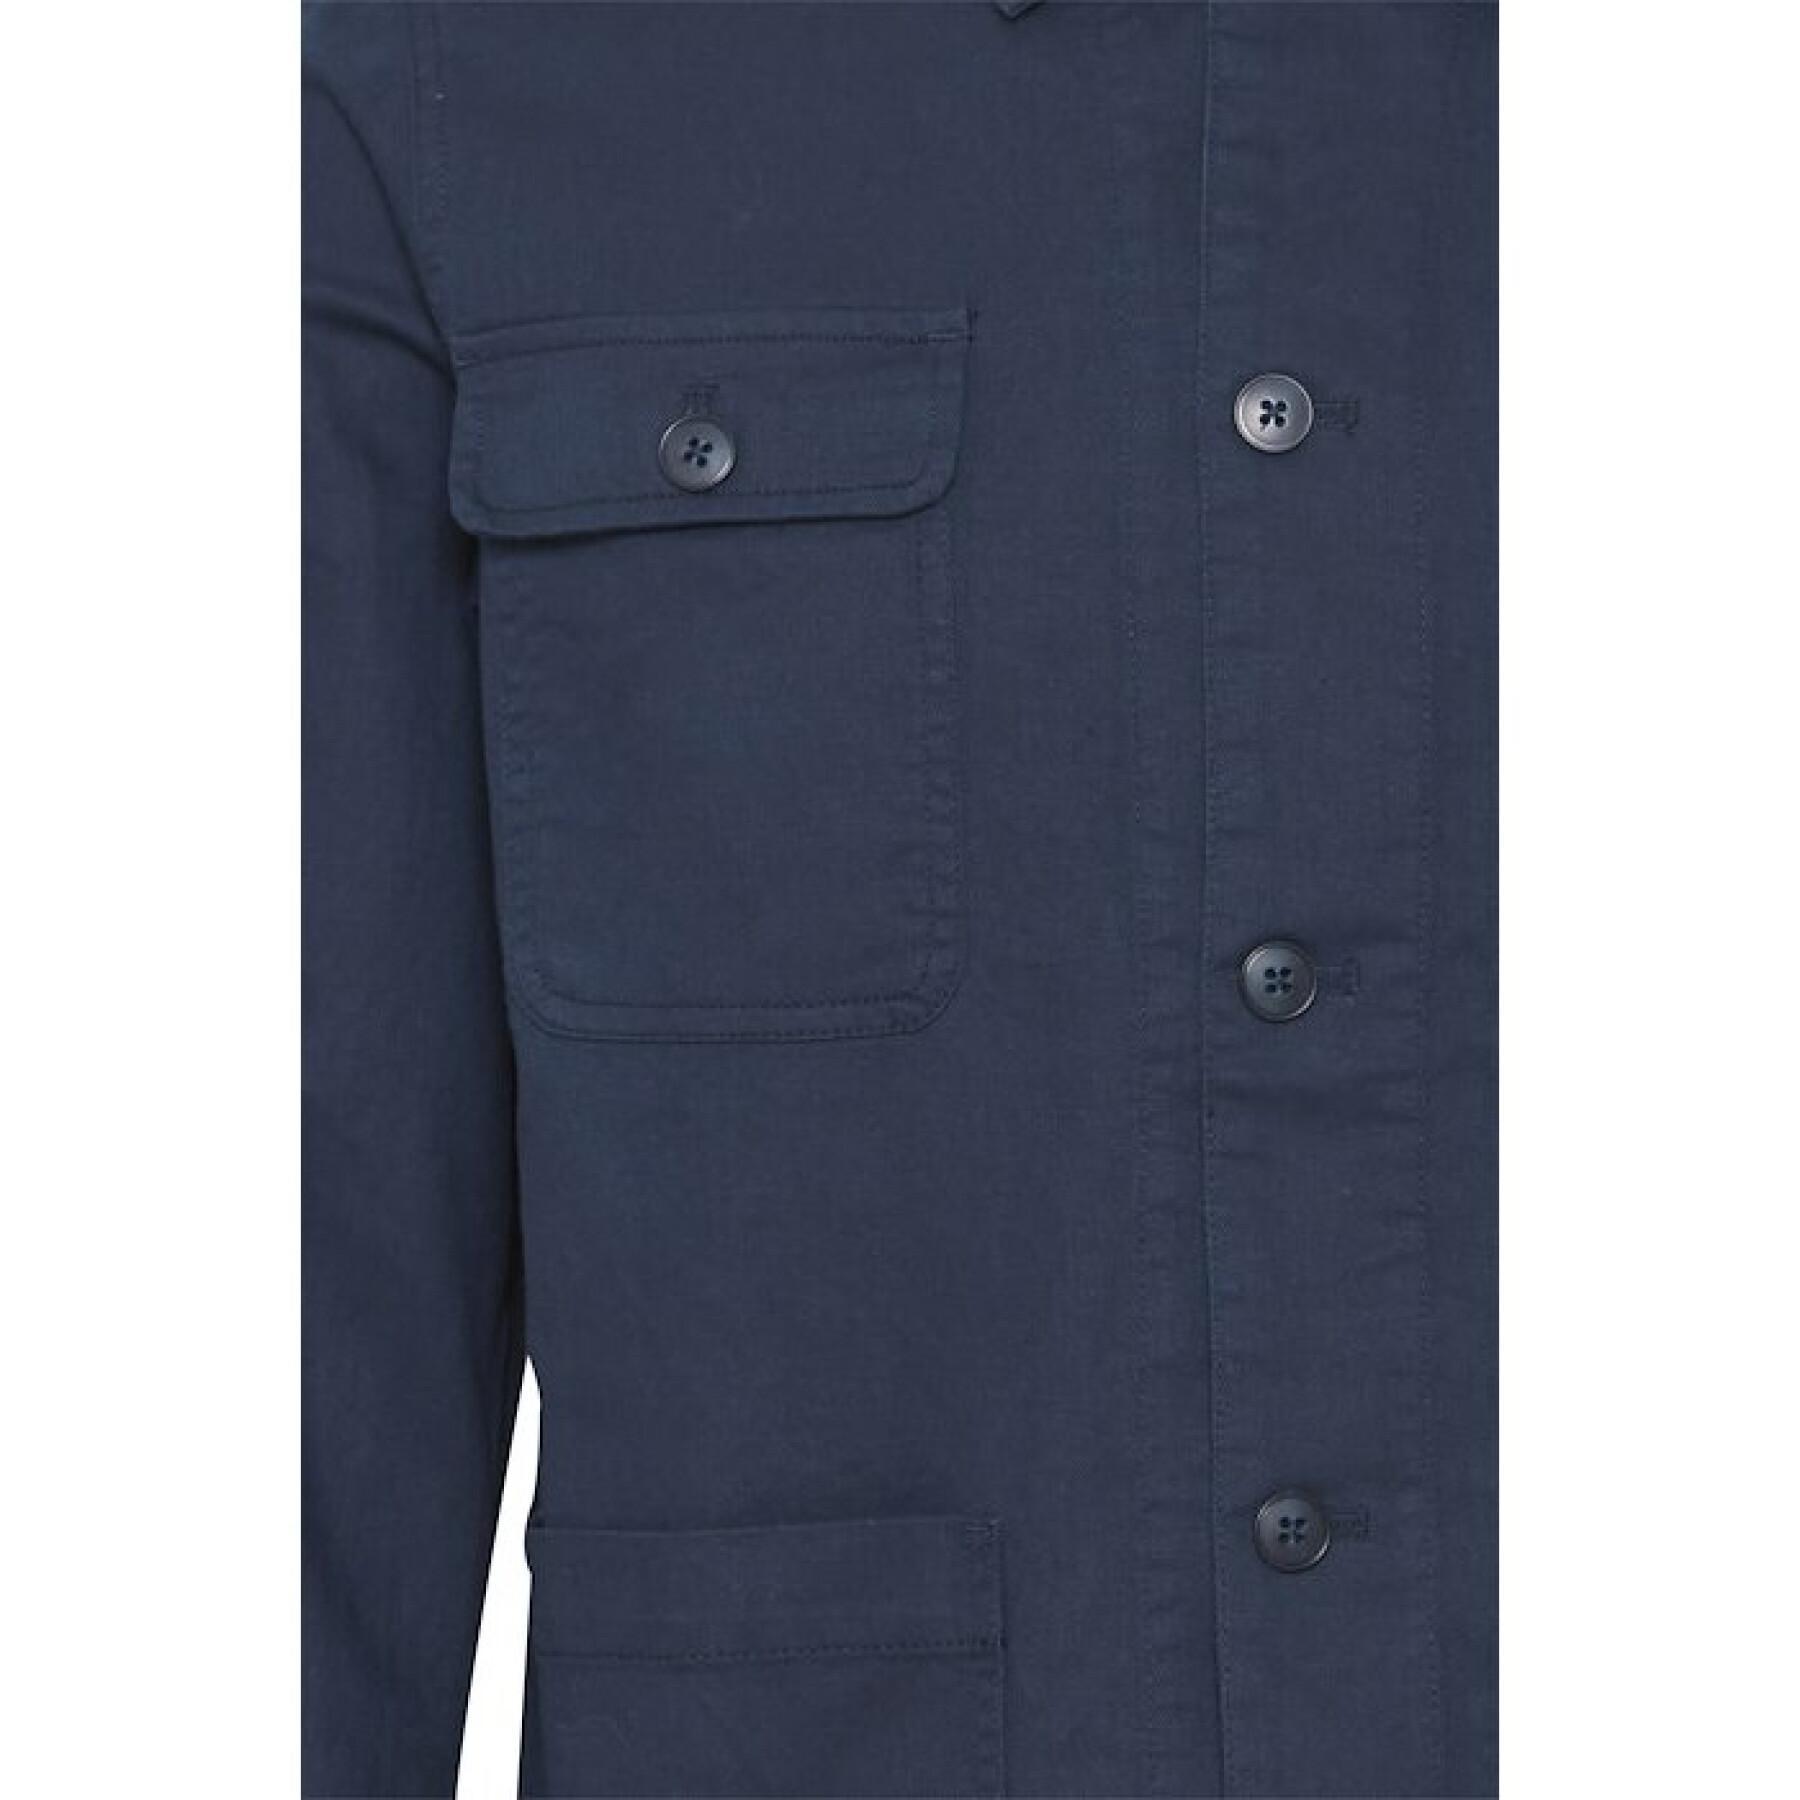 Jacket linen blend Casual Friday Jerslv 0050